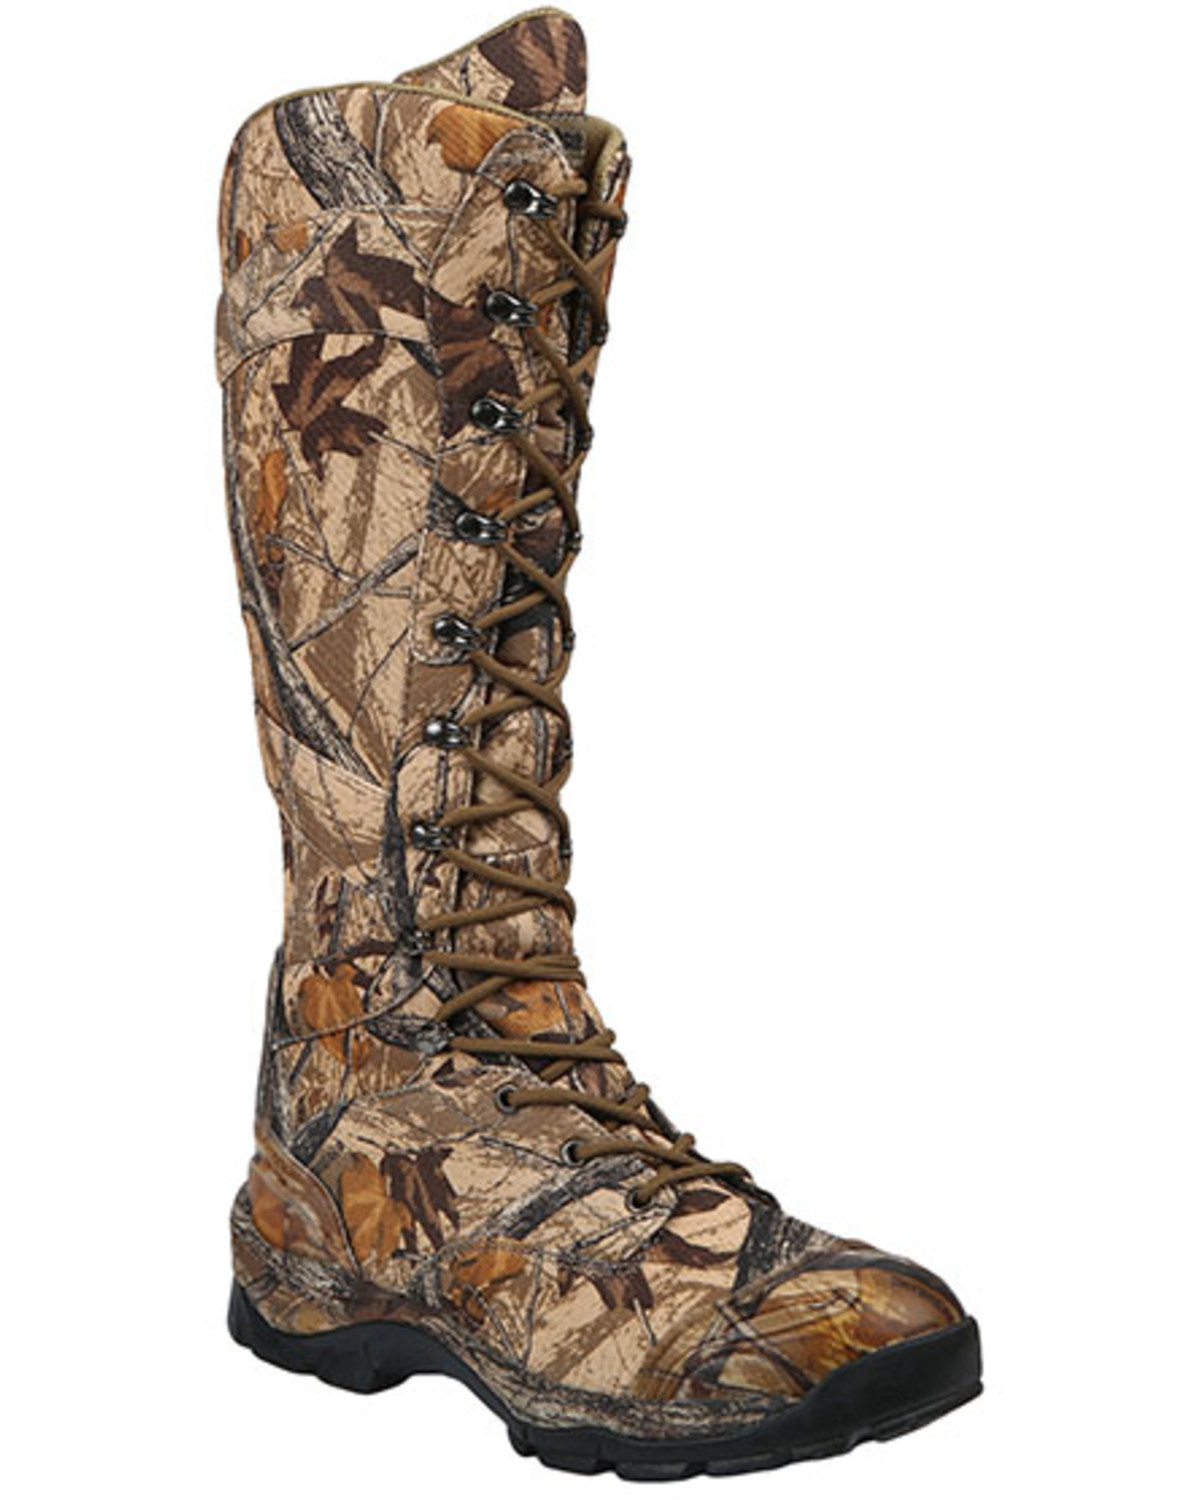 Northside Men's Kamiak Ridge Snake Proof Hunting Boots - Soft Toe